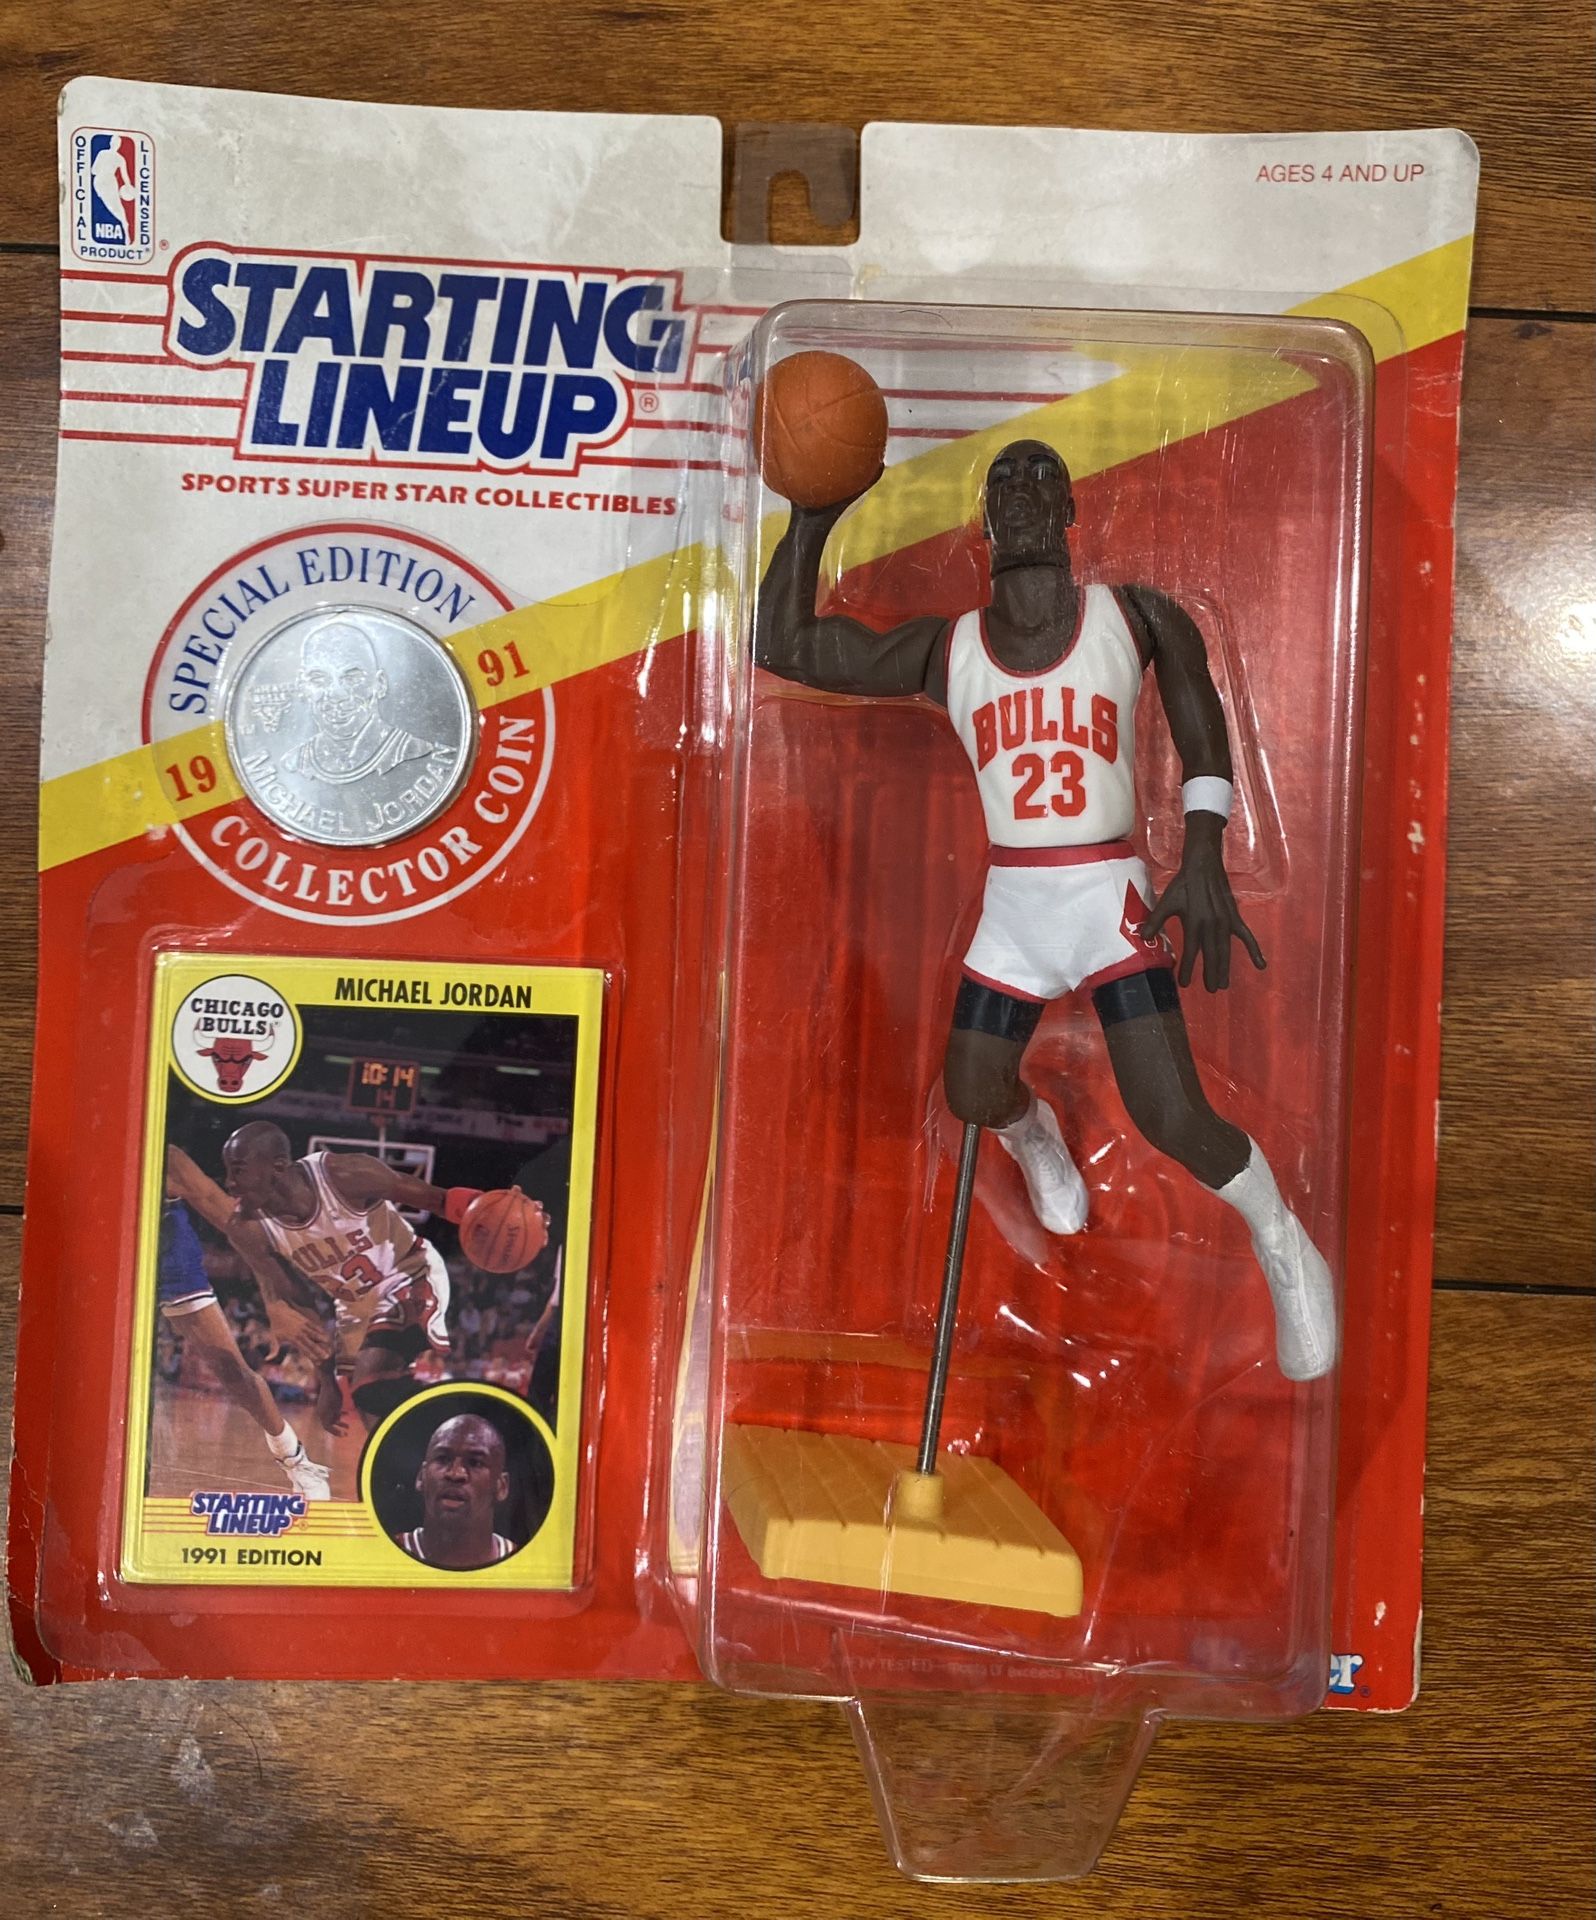 1991 Michael Jordan Starting Lineup Retro Action Figure Card & Coin NIB